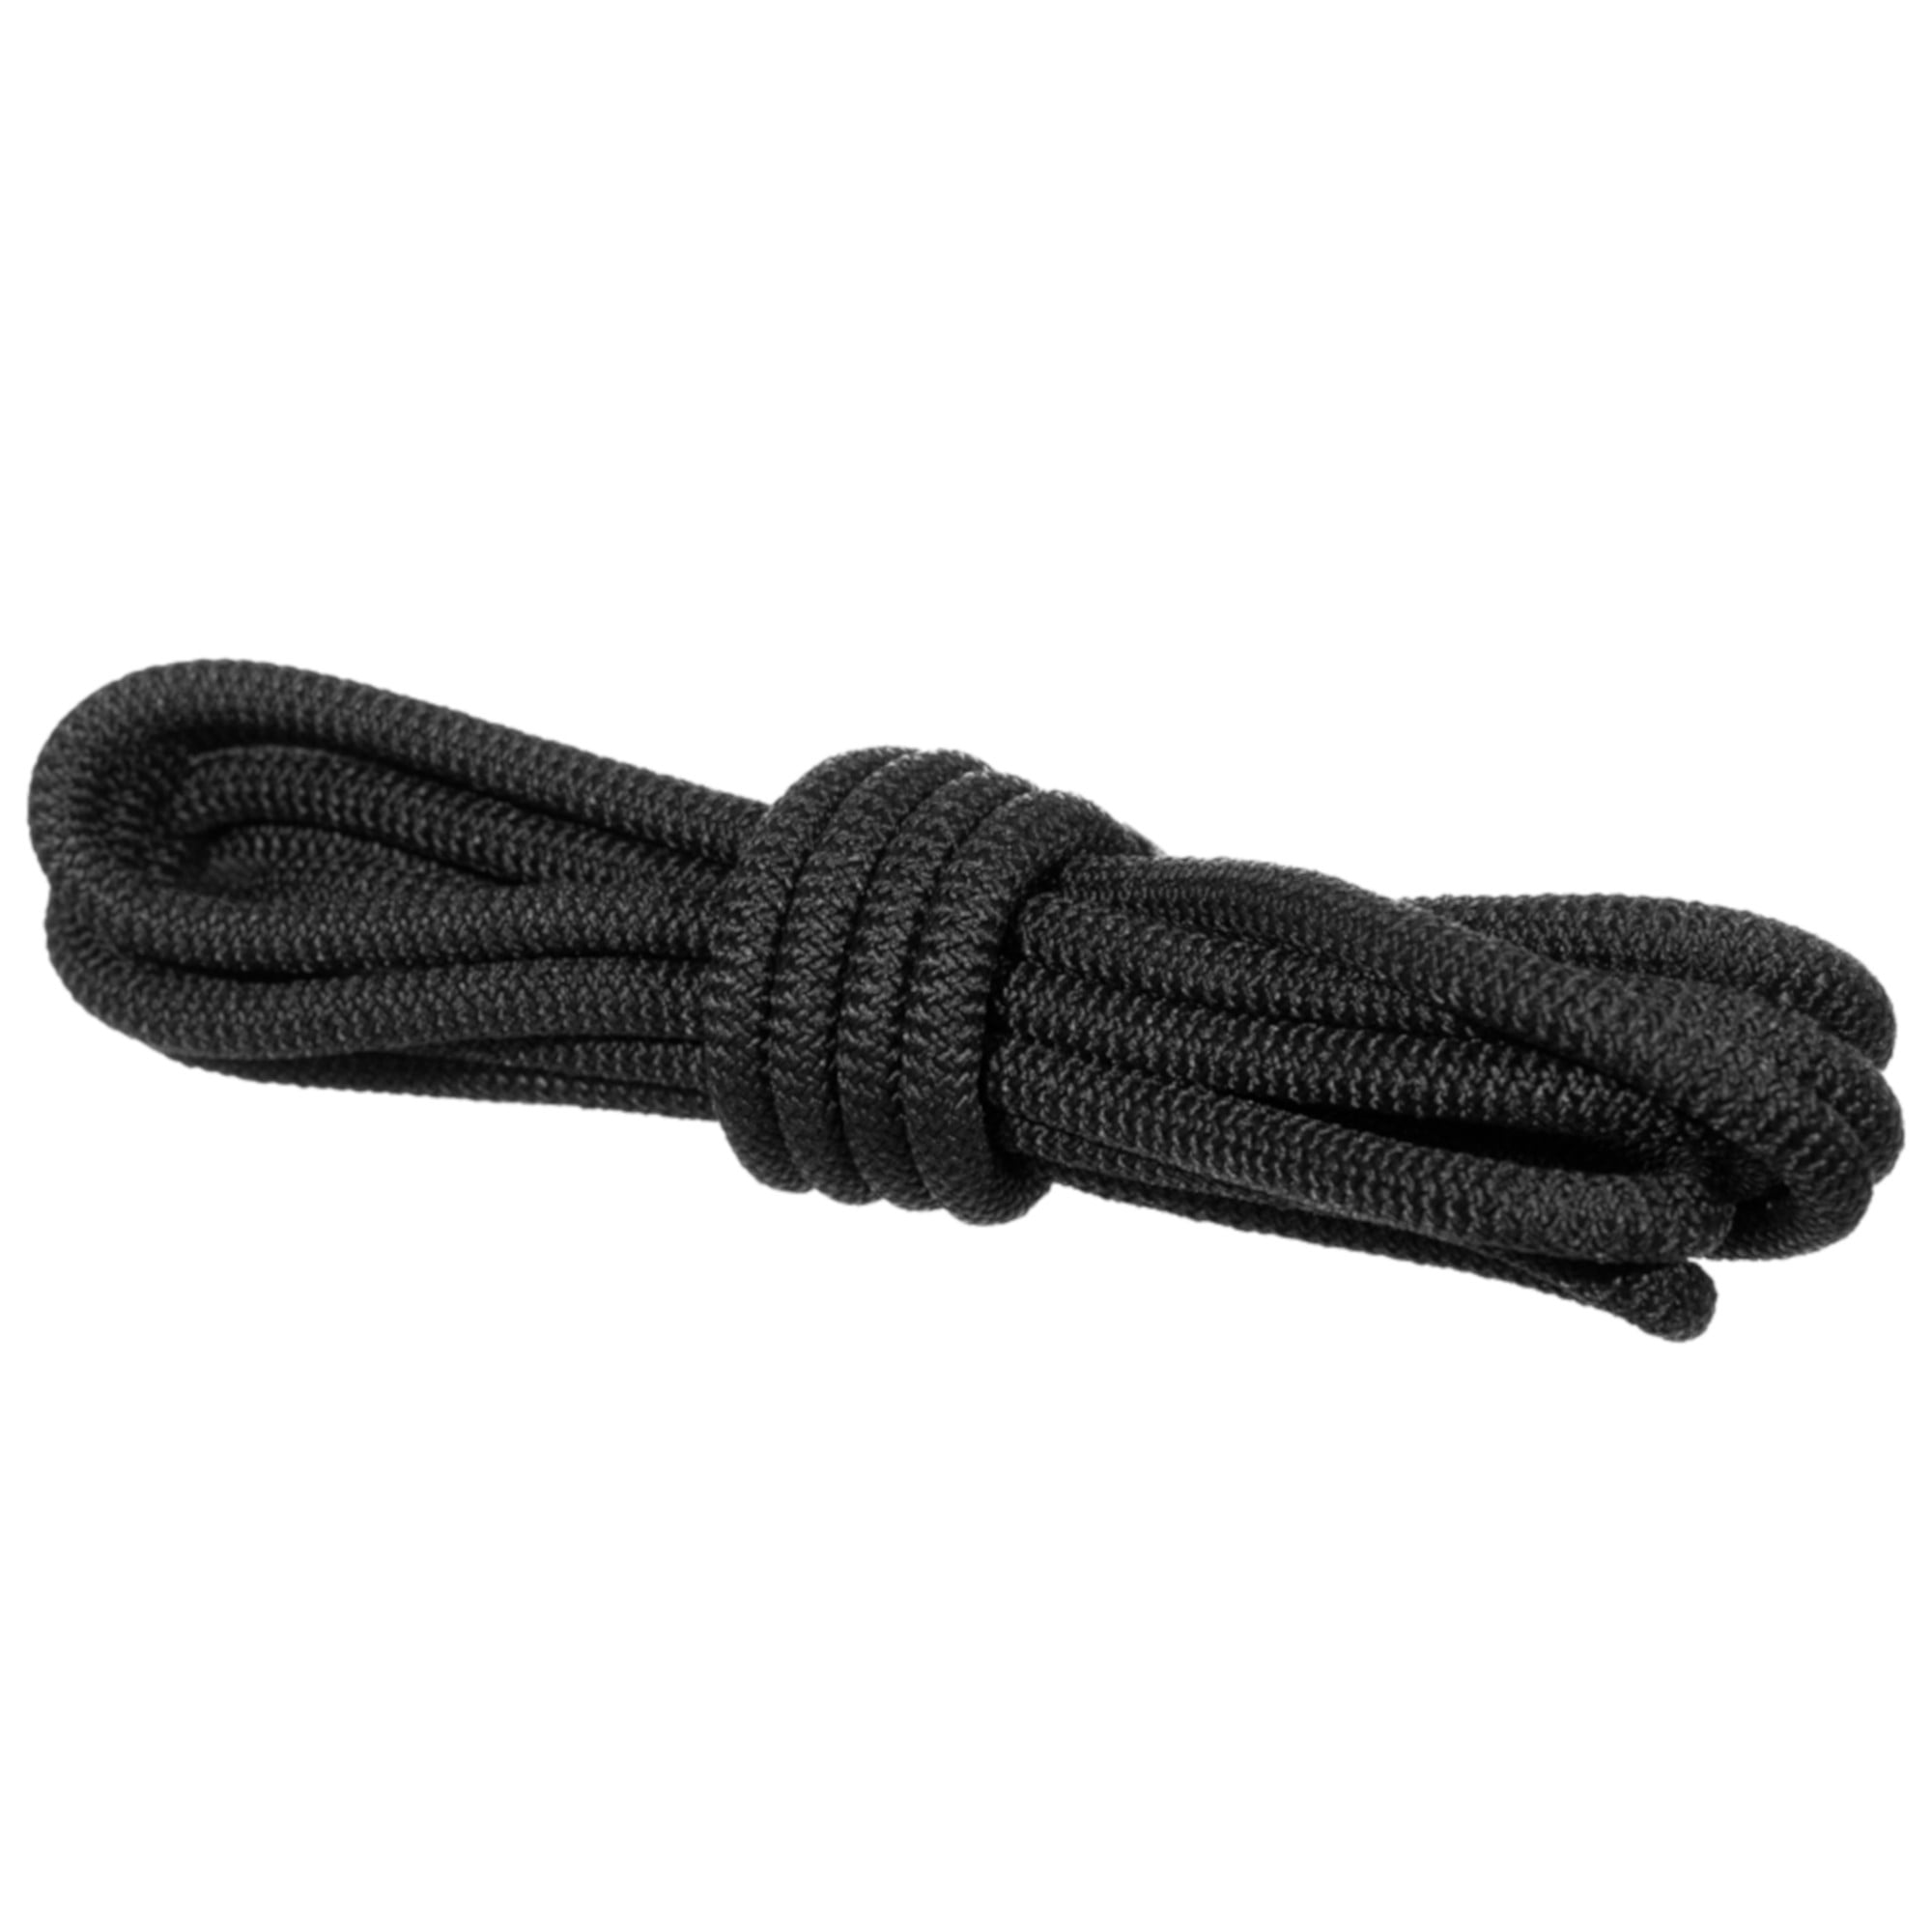 Premium Marine Shock Cord Stretch Cord Bungee Braided Polyester Black White Rope 